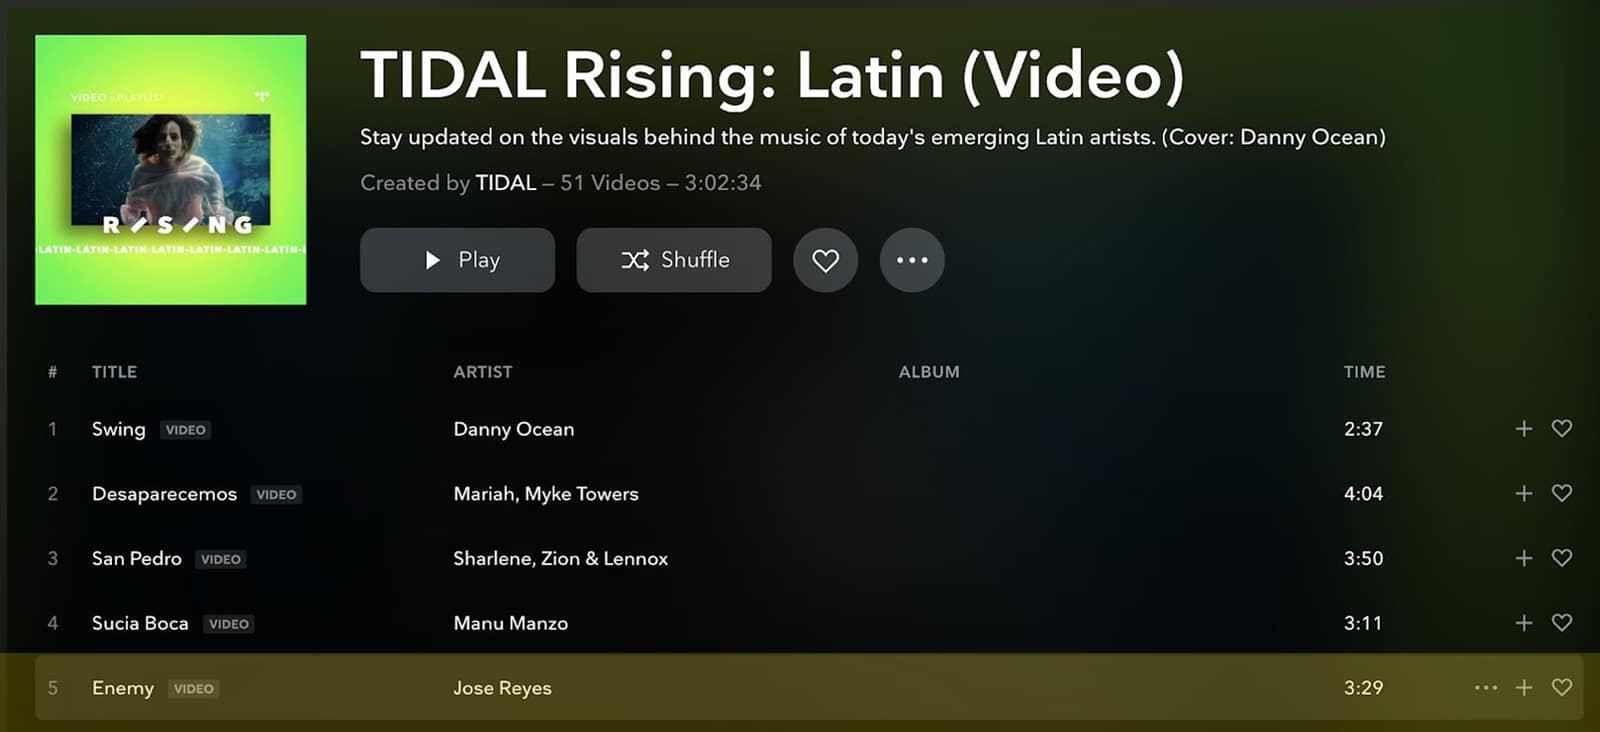 Tidal risijng latin video Playlist